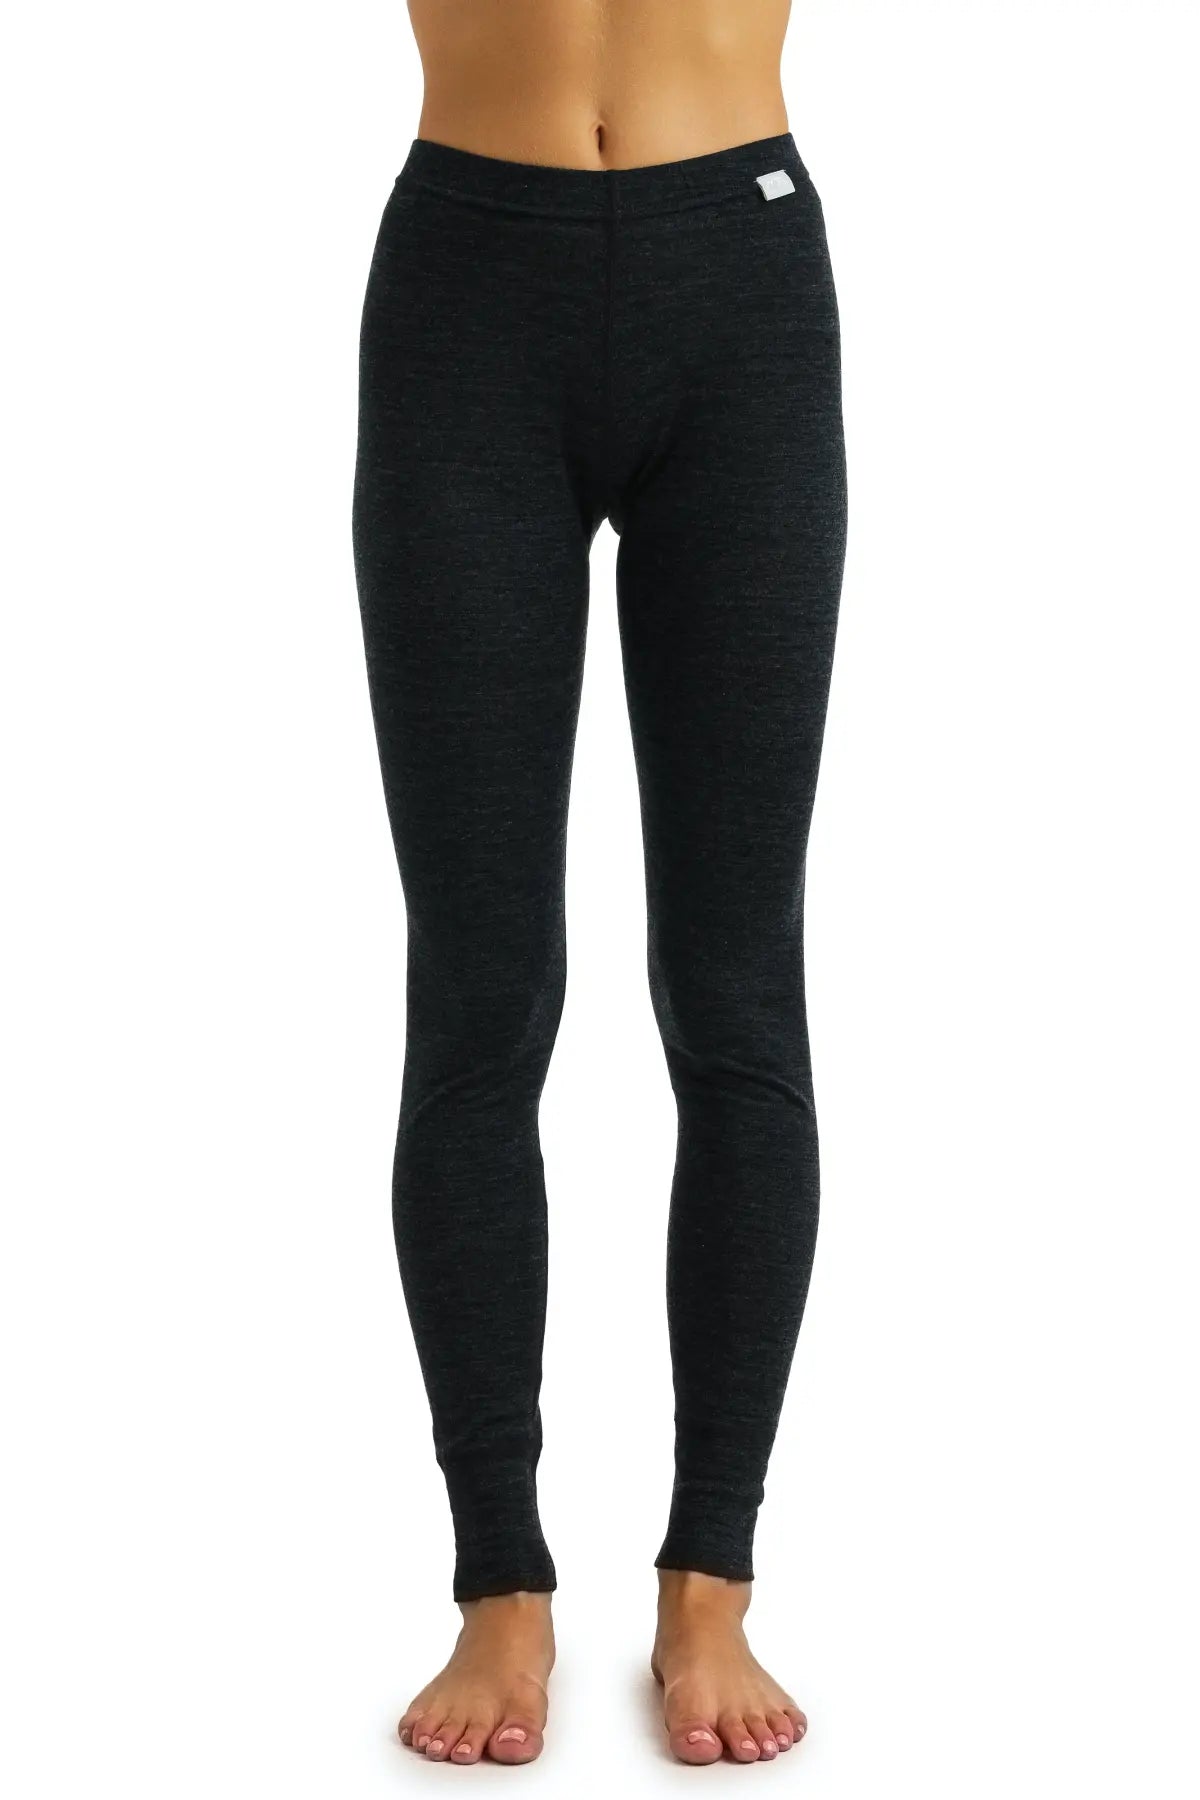 Women's 100% Merino Wool Base Layer Pants for Every Season – Merino Tech